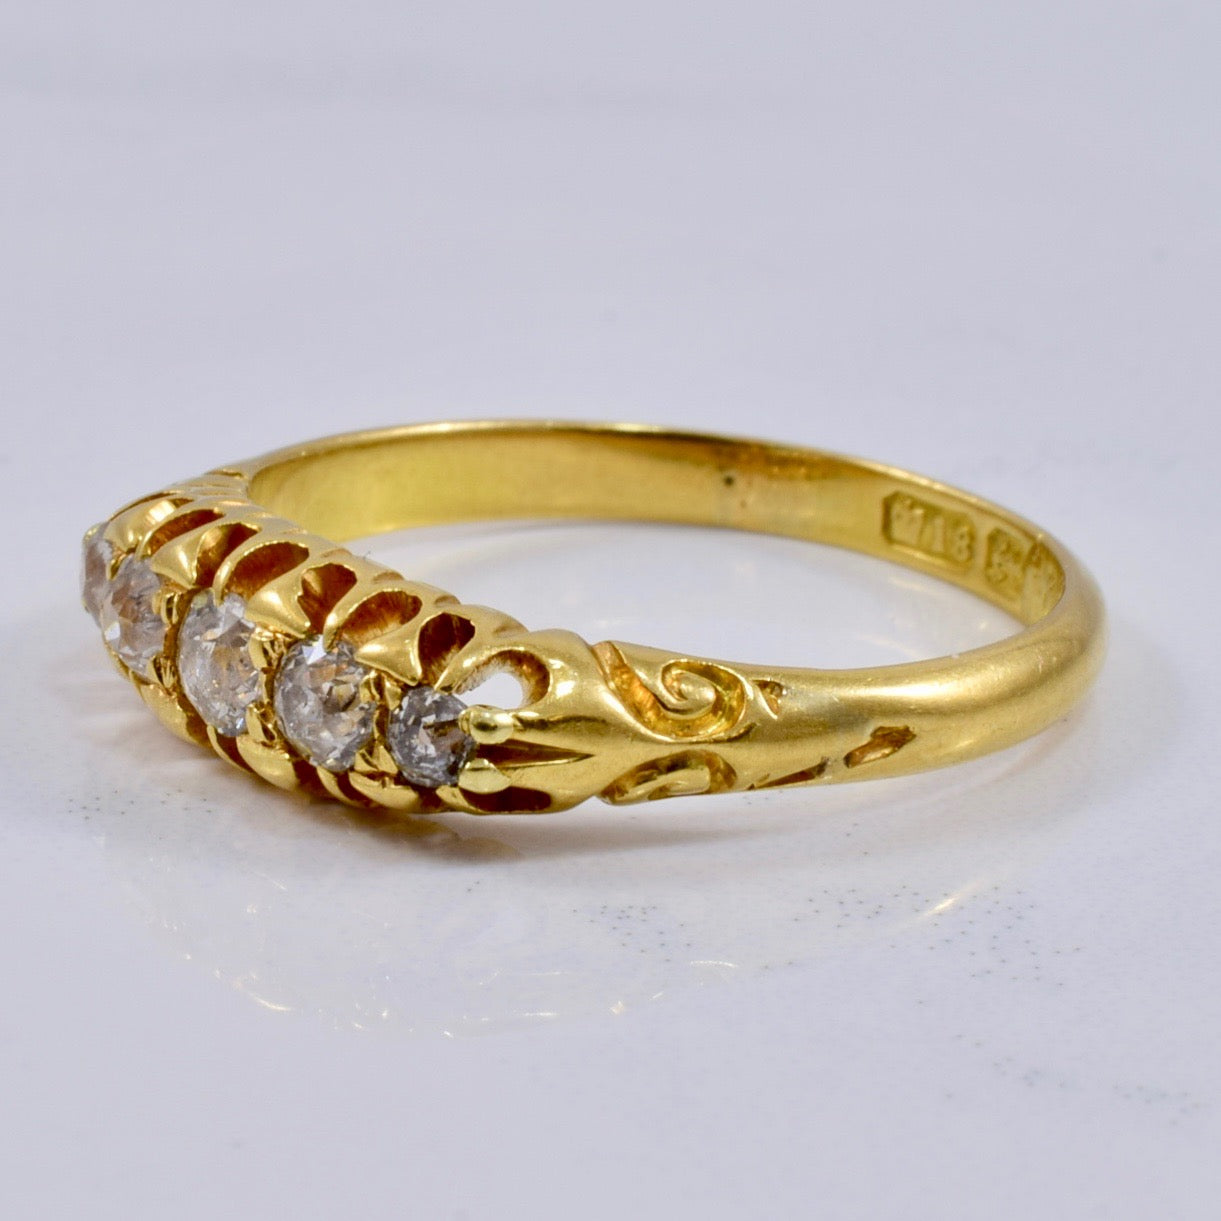 Victorian Era European Cut Diamond Ring | 0.32 ctw SZ 8 |